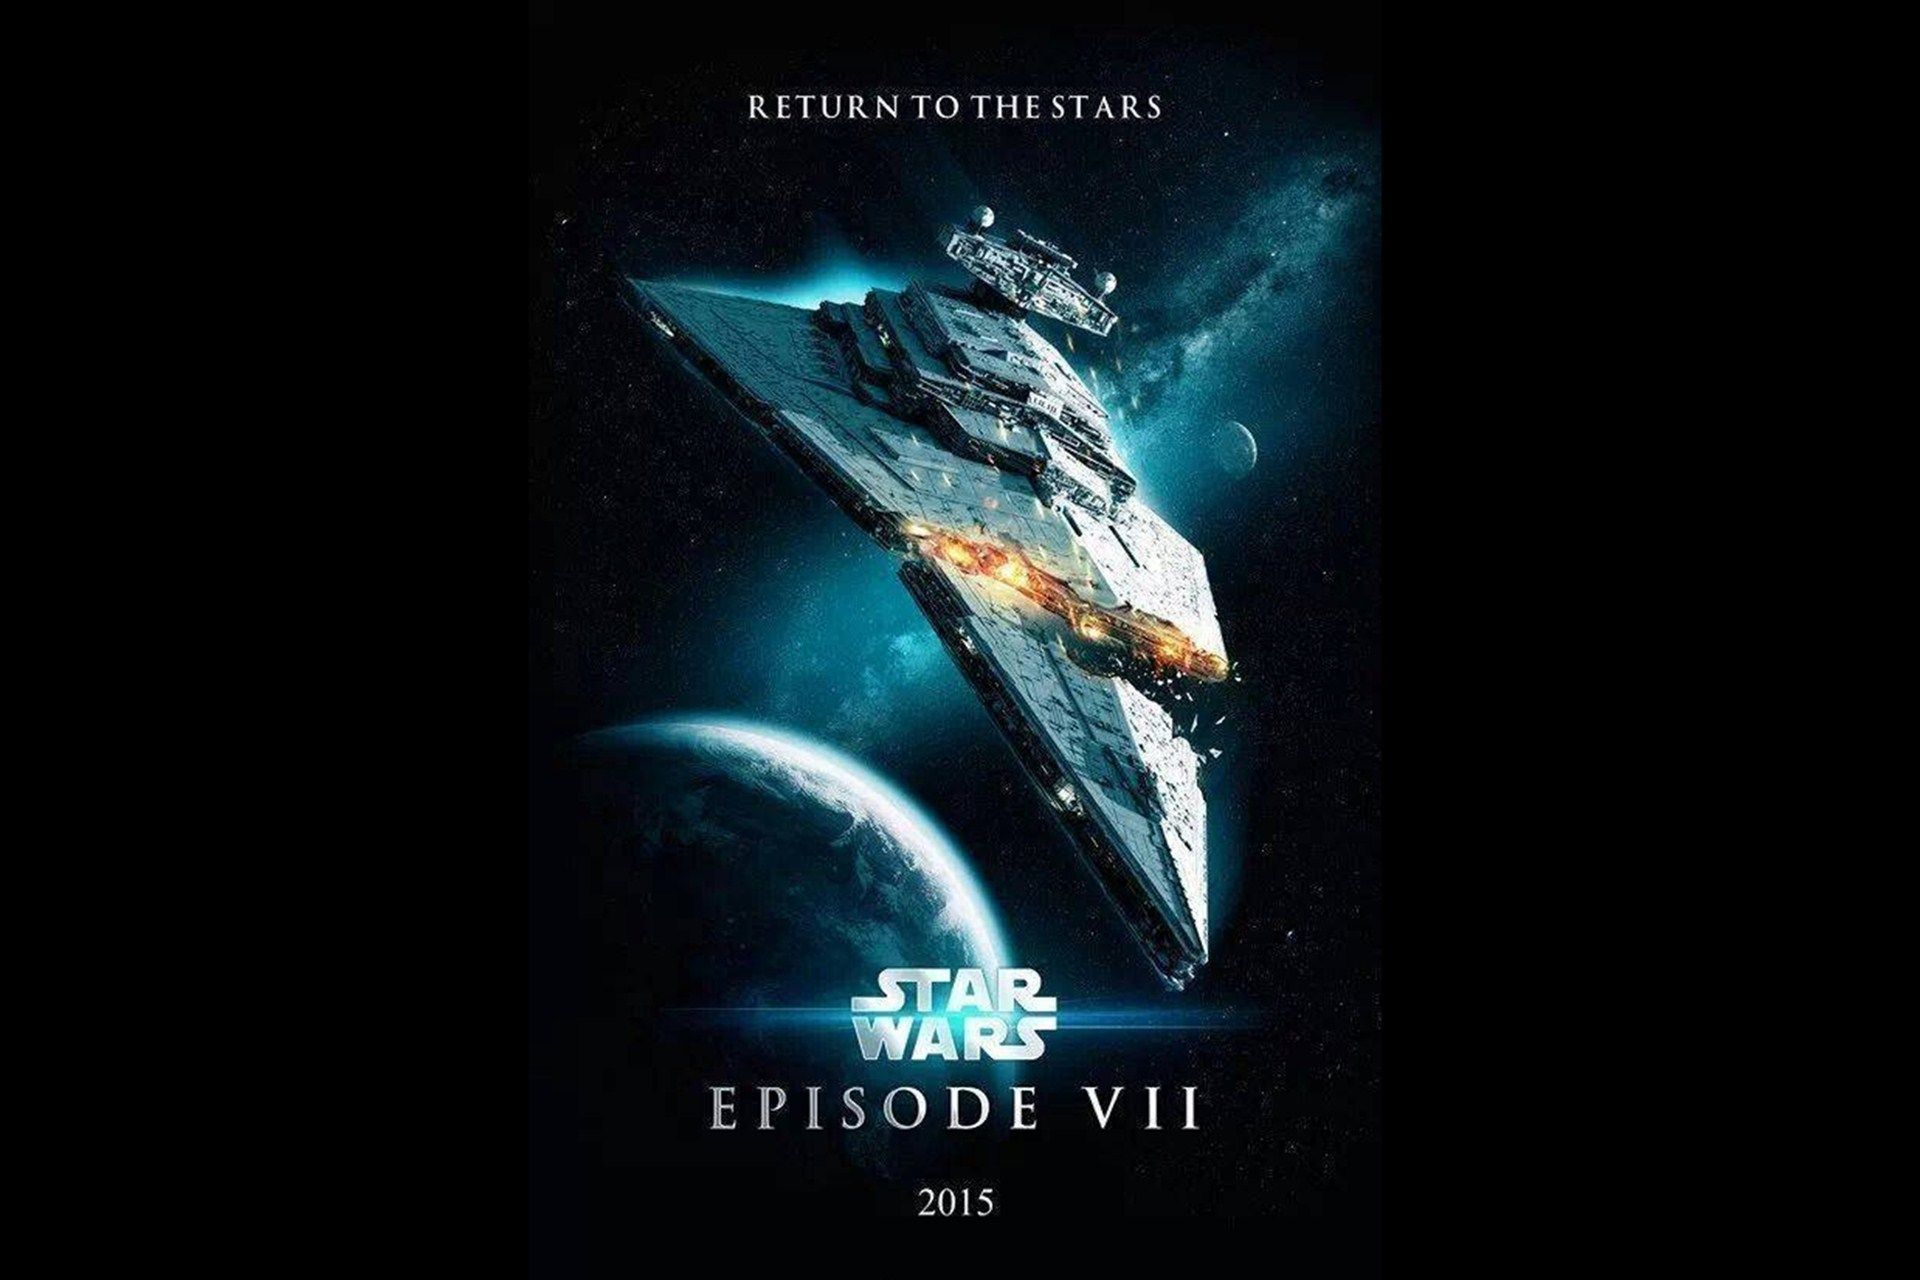 The Force Awakens Star Wars 7 HD Wallpaper | Free Dowload Wallpaper HD